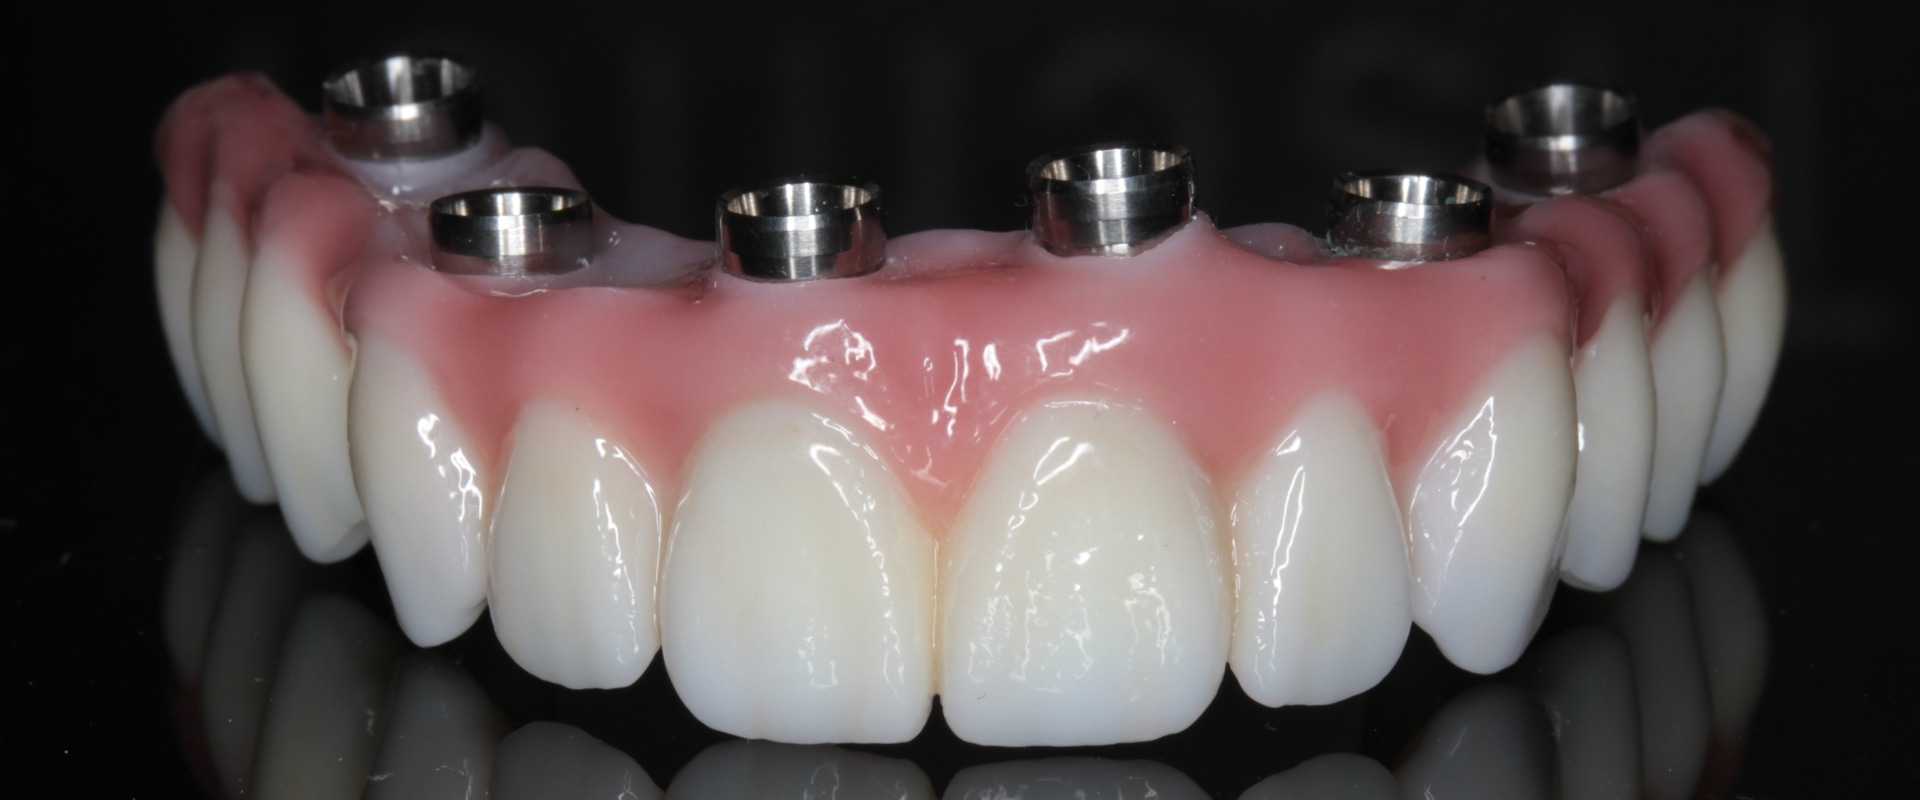 Do prosthodontists pull teeth?